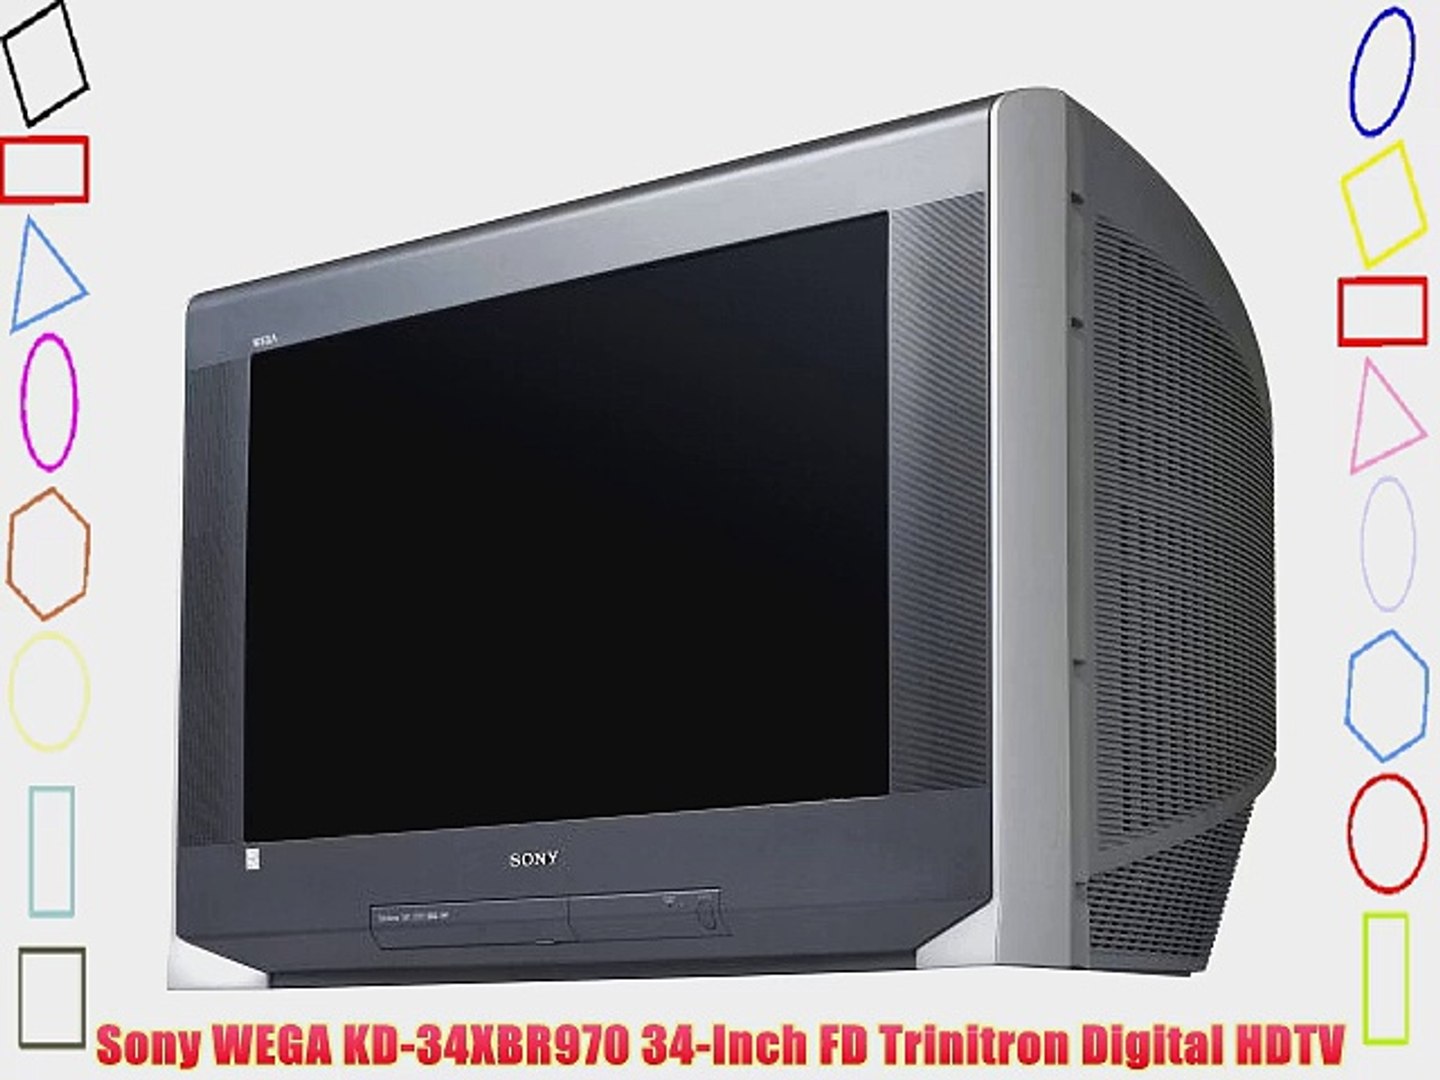 Sony WEGA KD-34XBR970 34-Inch FD Trinitron Digital HDTV - video Dailymotion